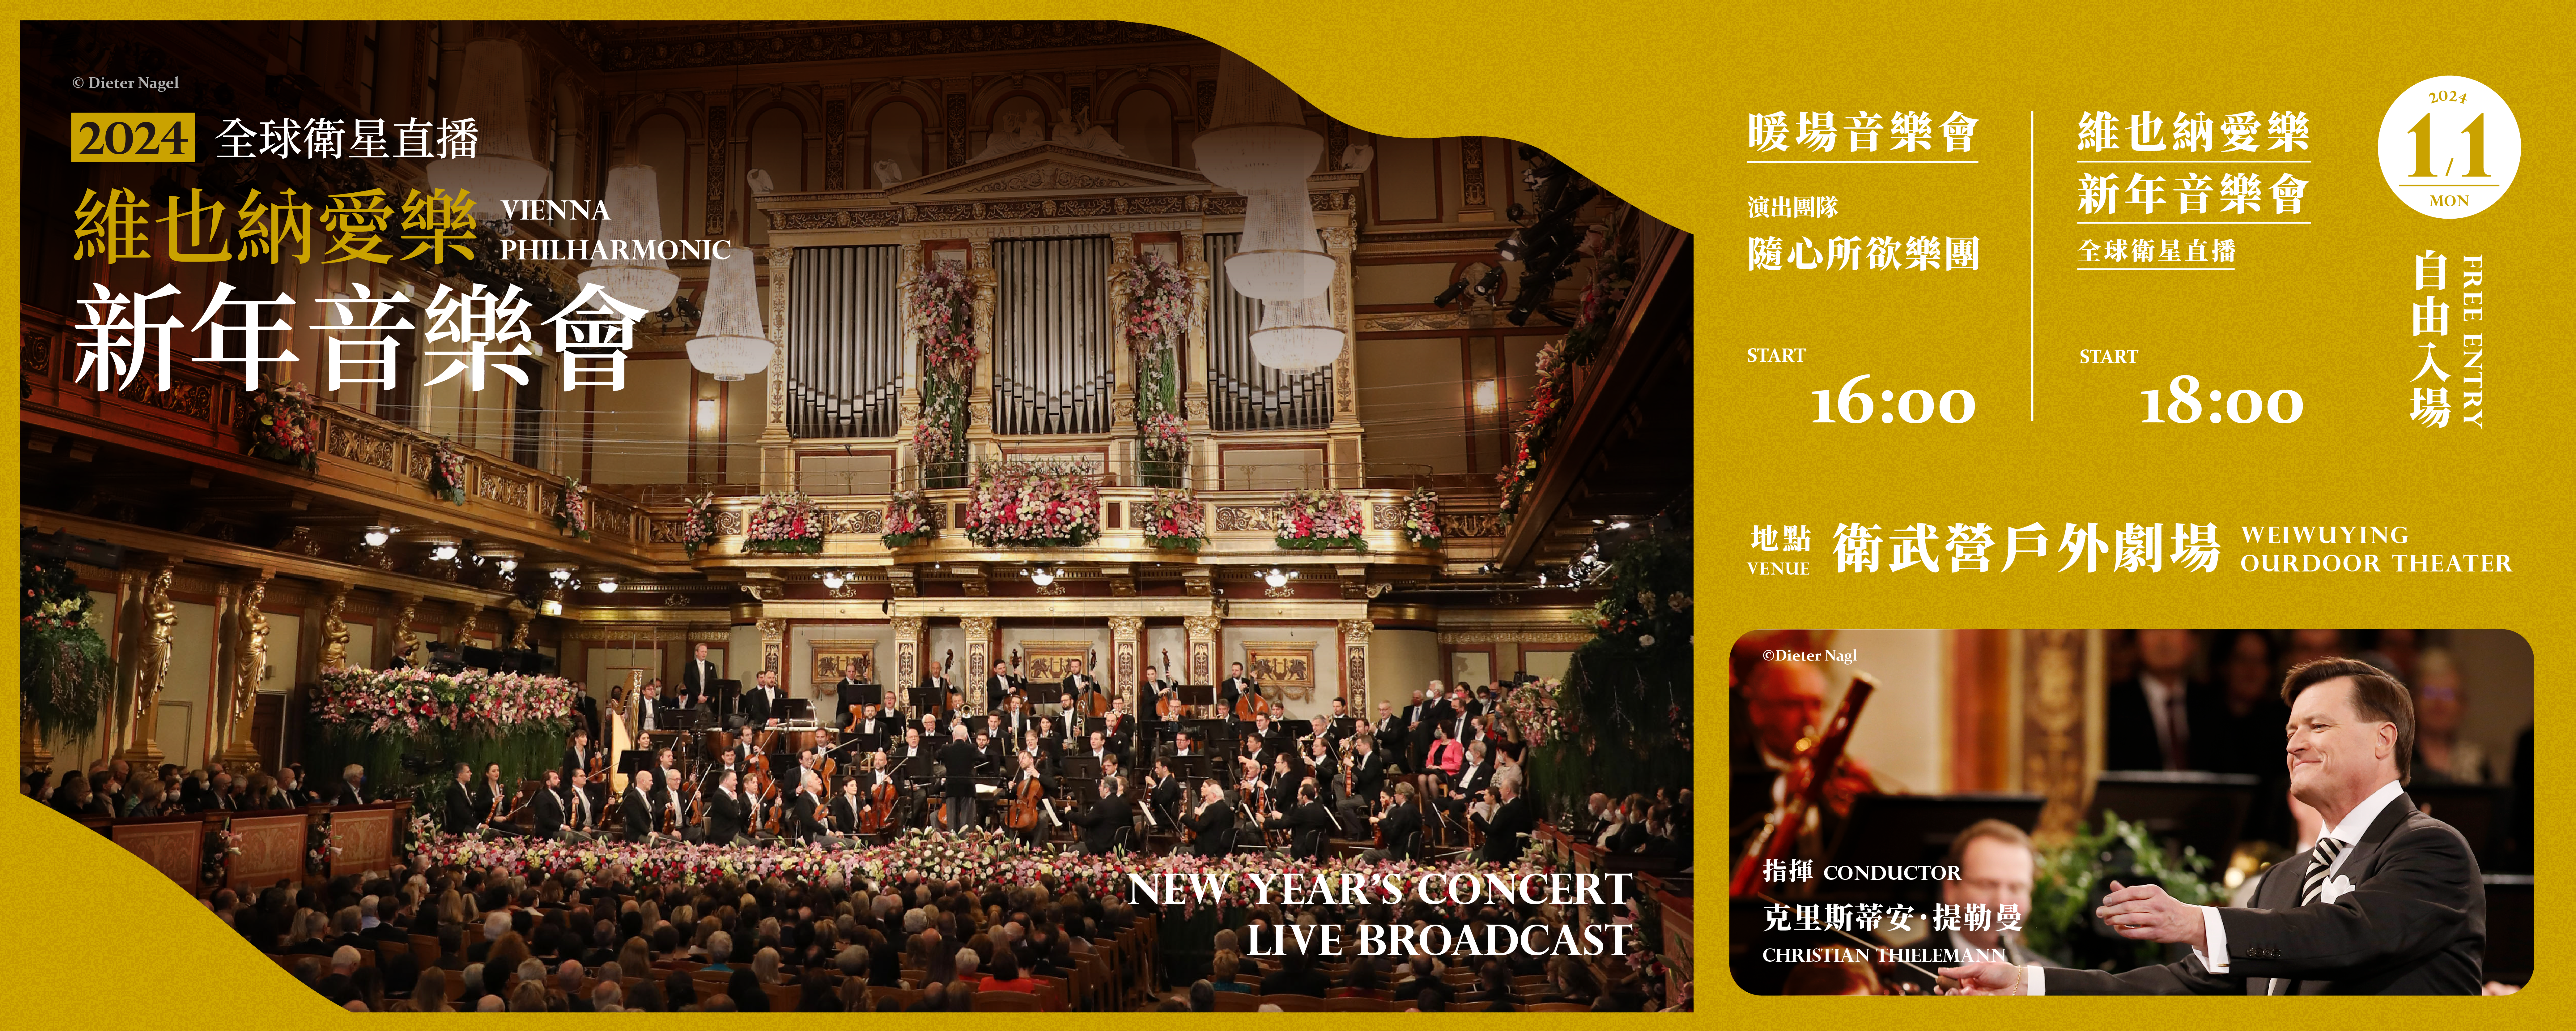 Vienna Philharmonic - New Year's Concert Live Broadcast